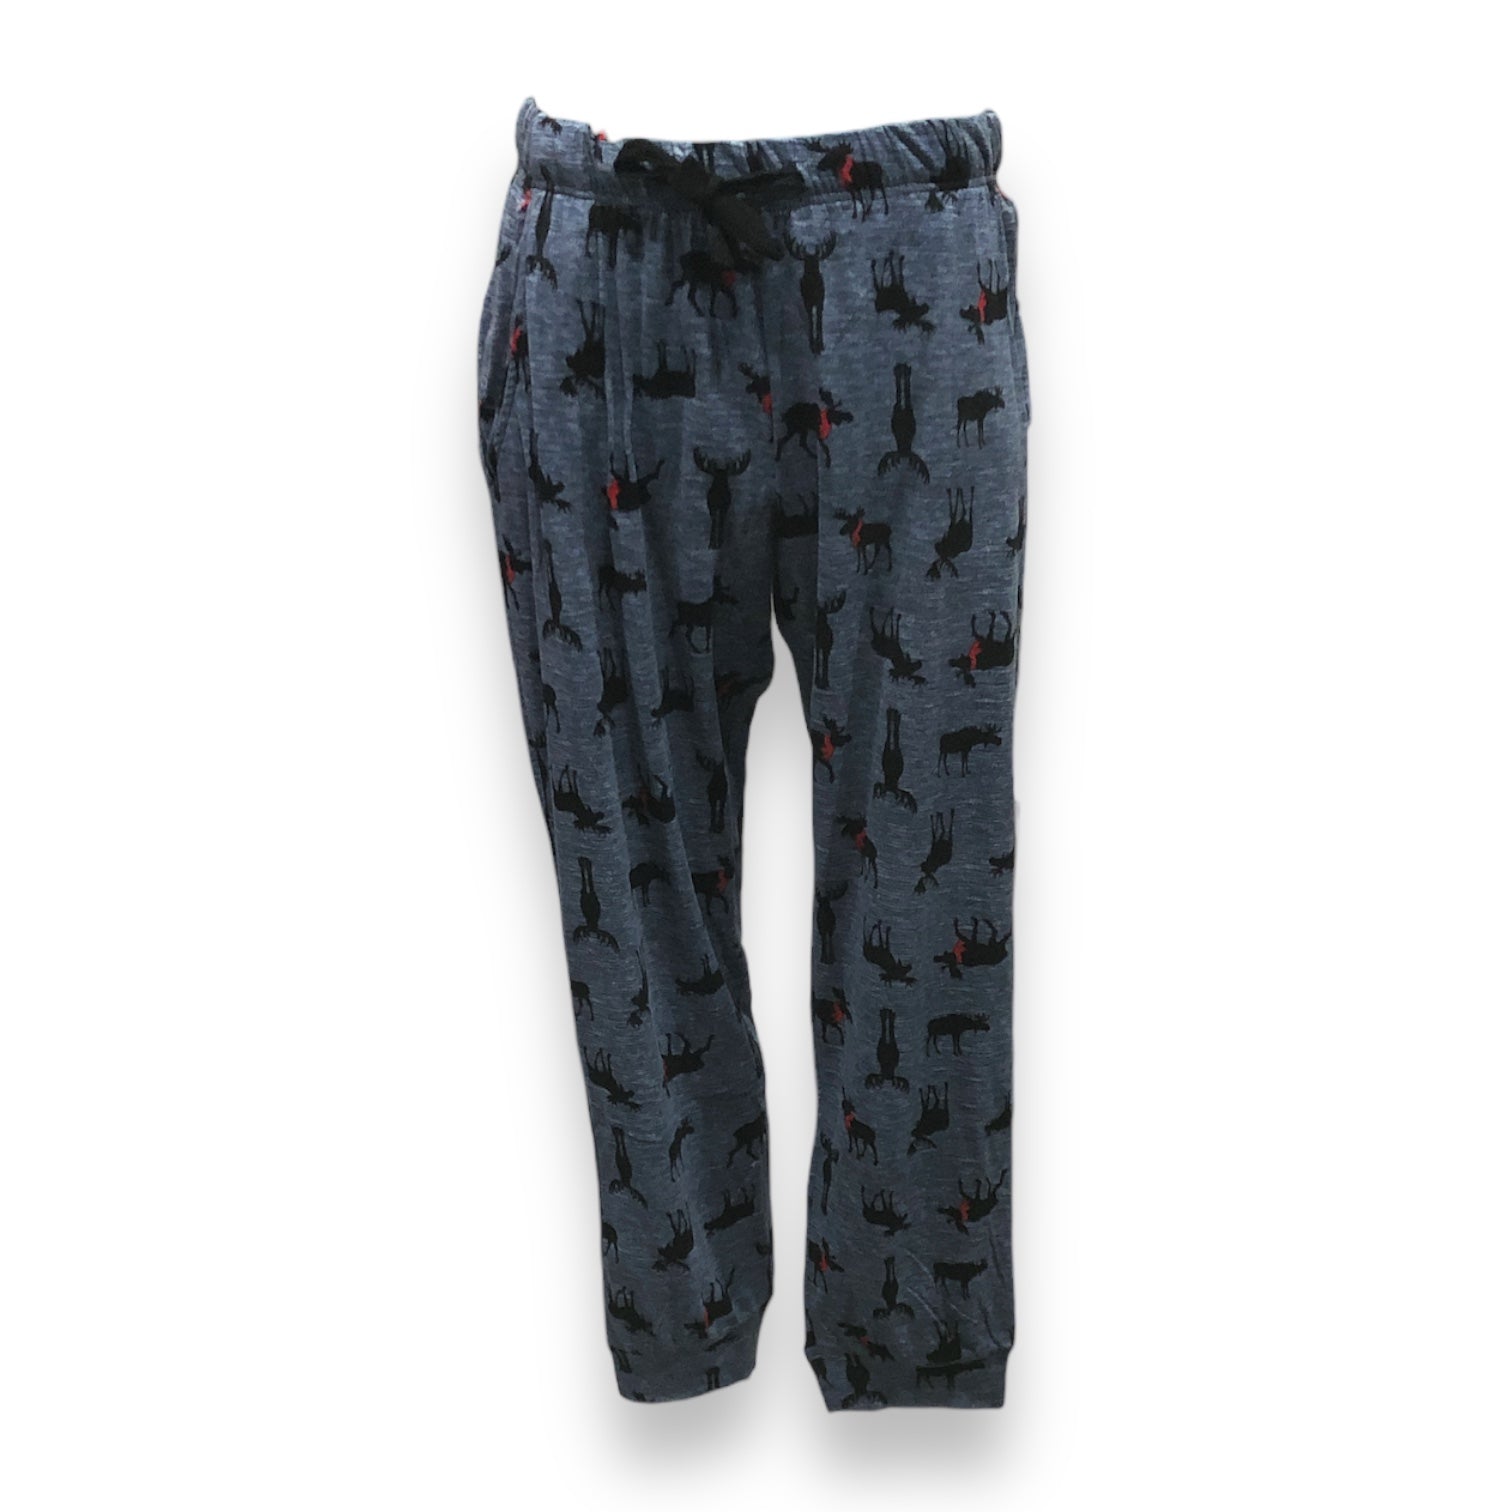 BULK BUY - Men's Peached Jersey Knit Sleep Pants with Drawstring & Slash Pockets (6-Pack)